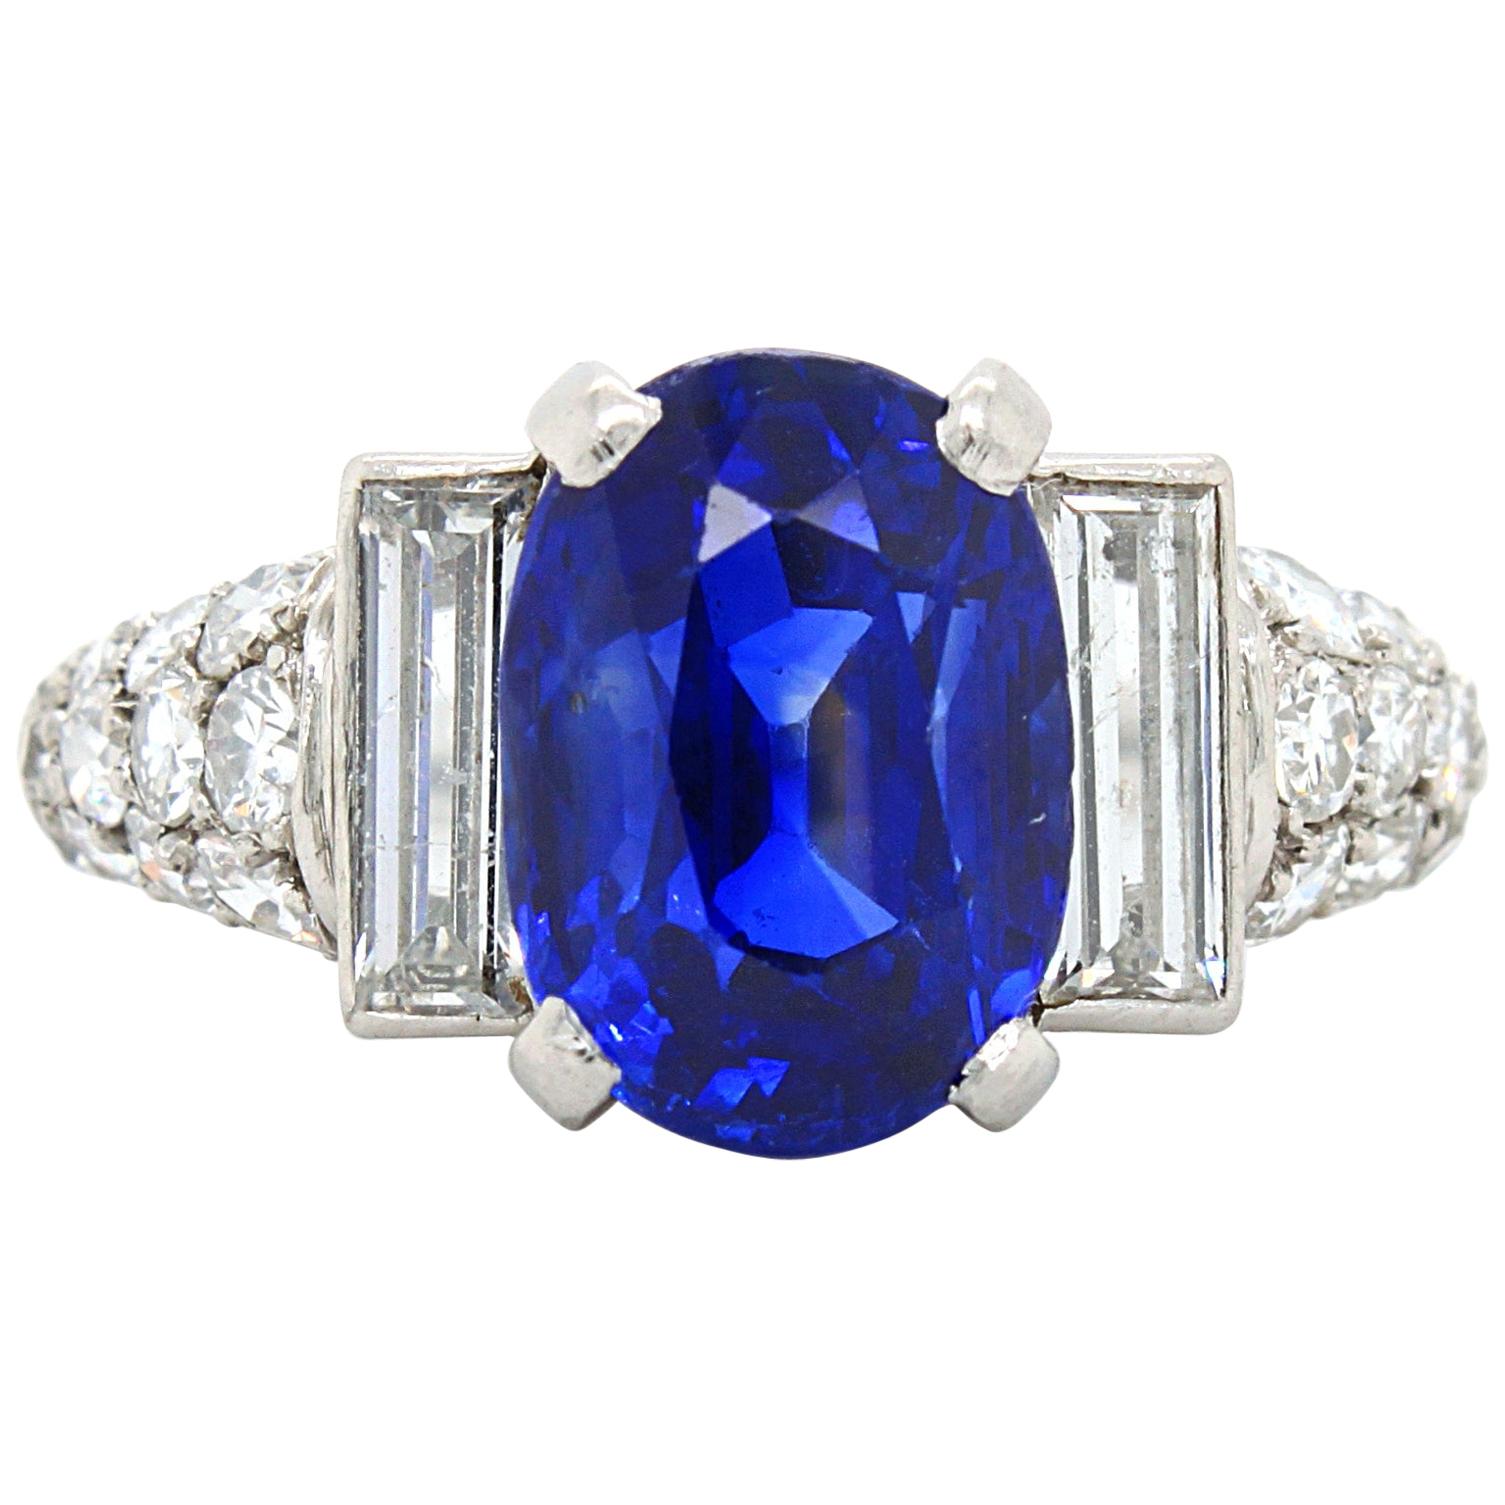 Sapphire 'No Heat' and Diamond Art Deco Ring, France, circa 1920s